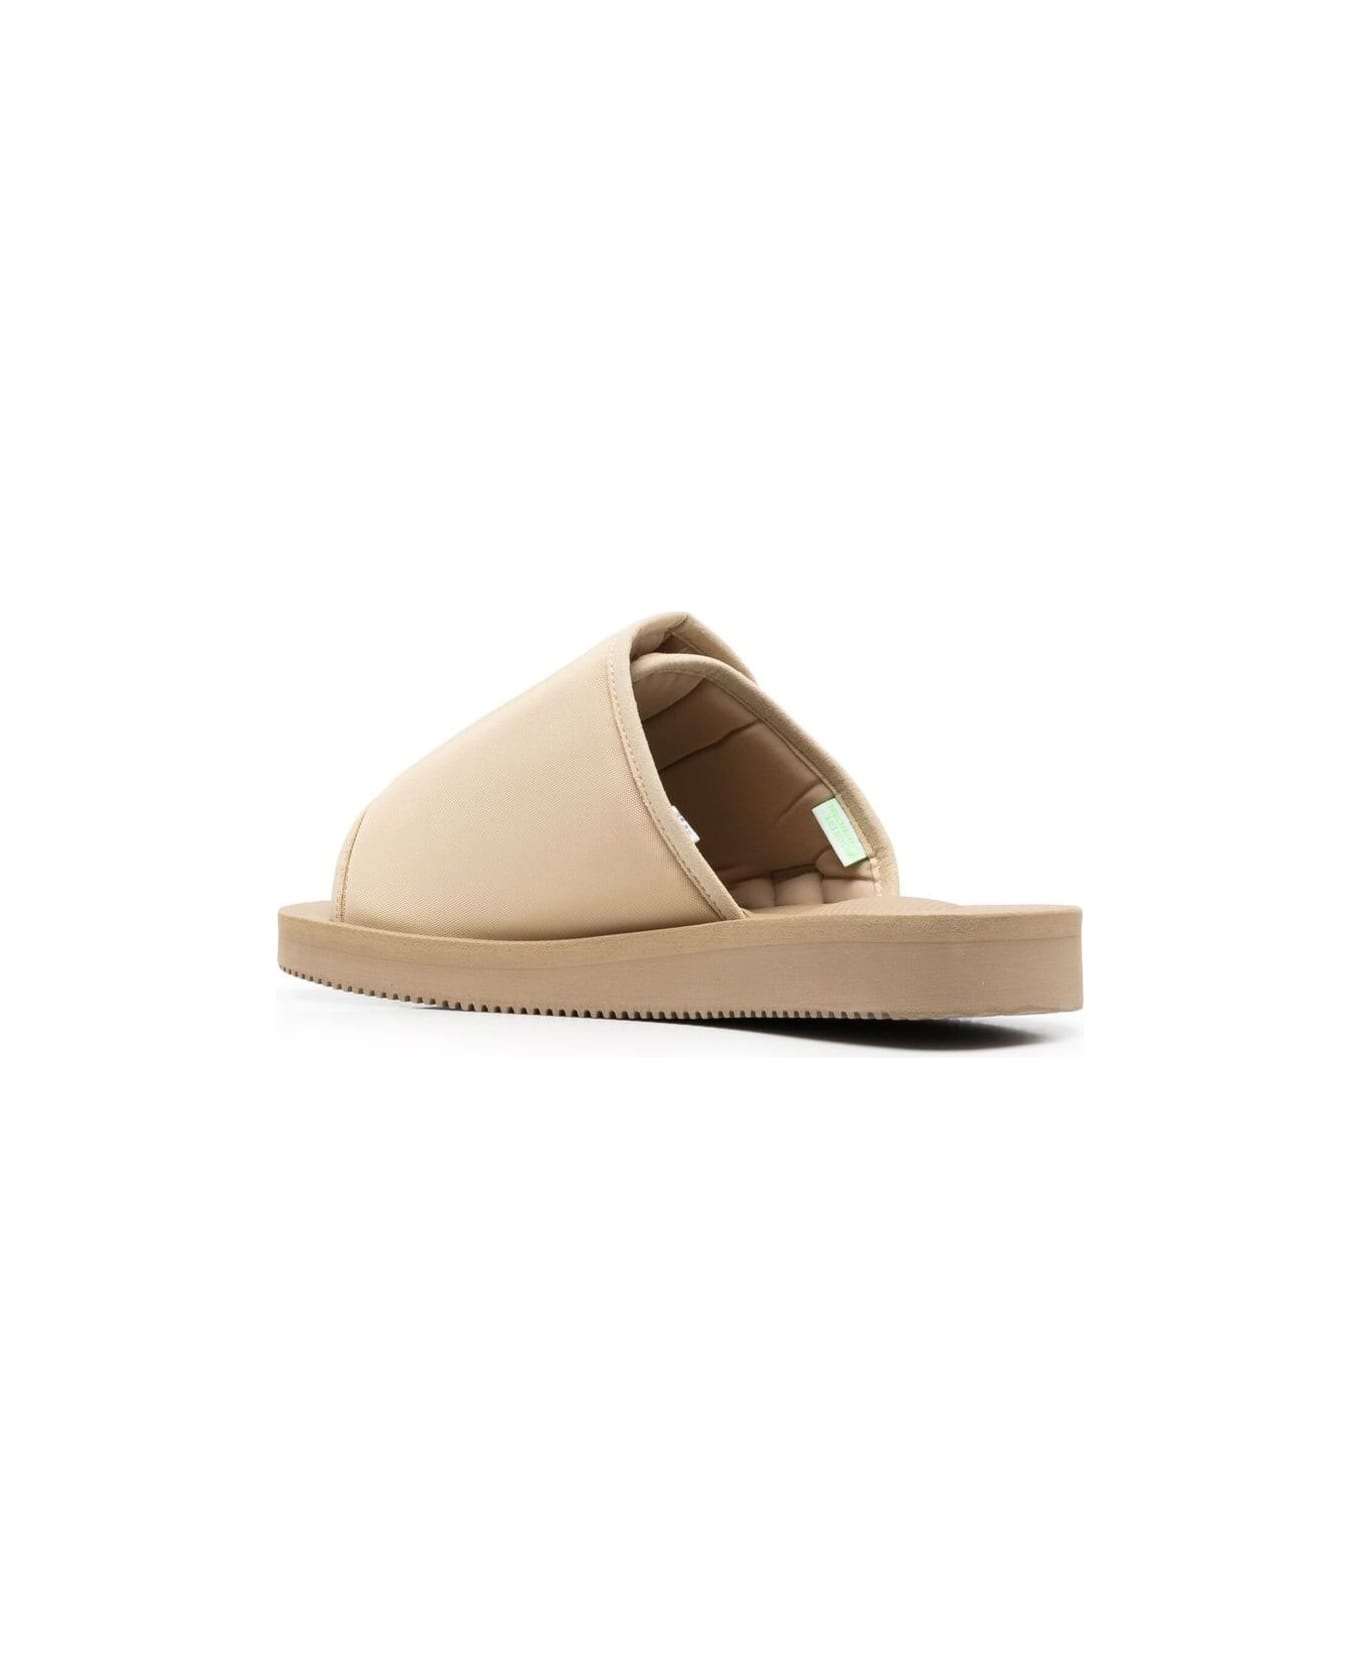 SUICOKE 'kaw-cab' Beige Sandals With Velcro Fastening In Nylon Man Suicoke - Beige その他各種シューズ